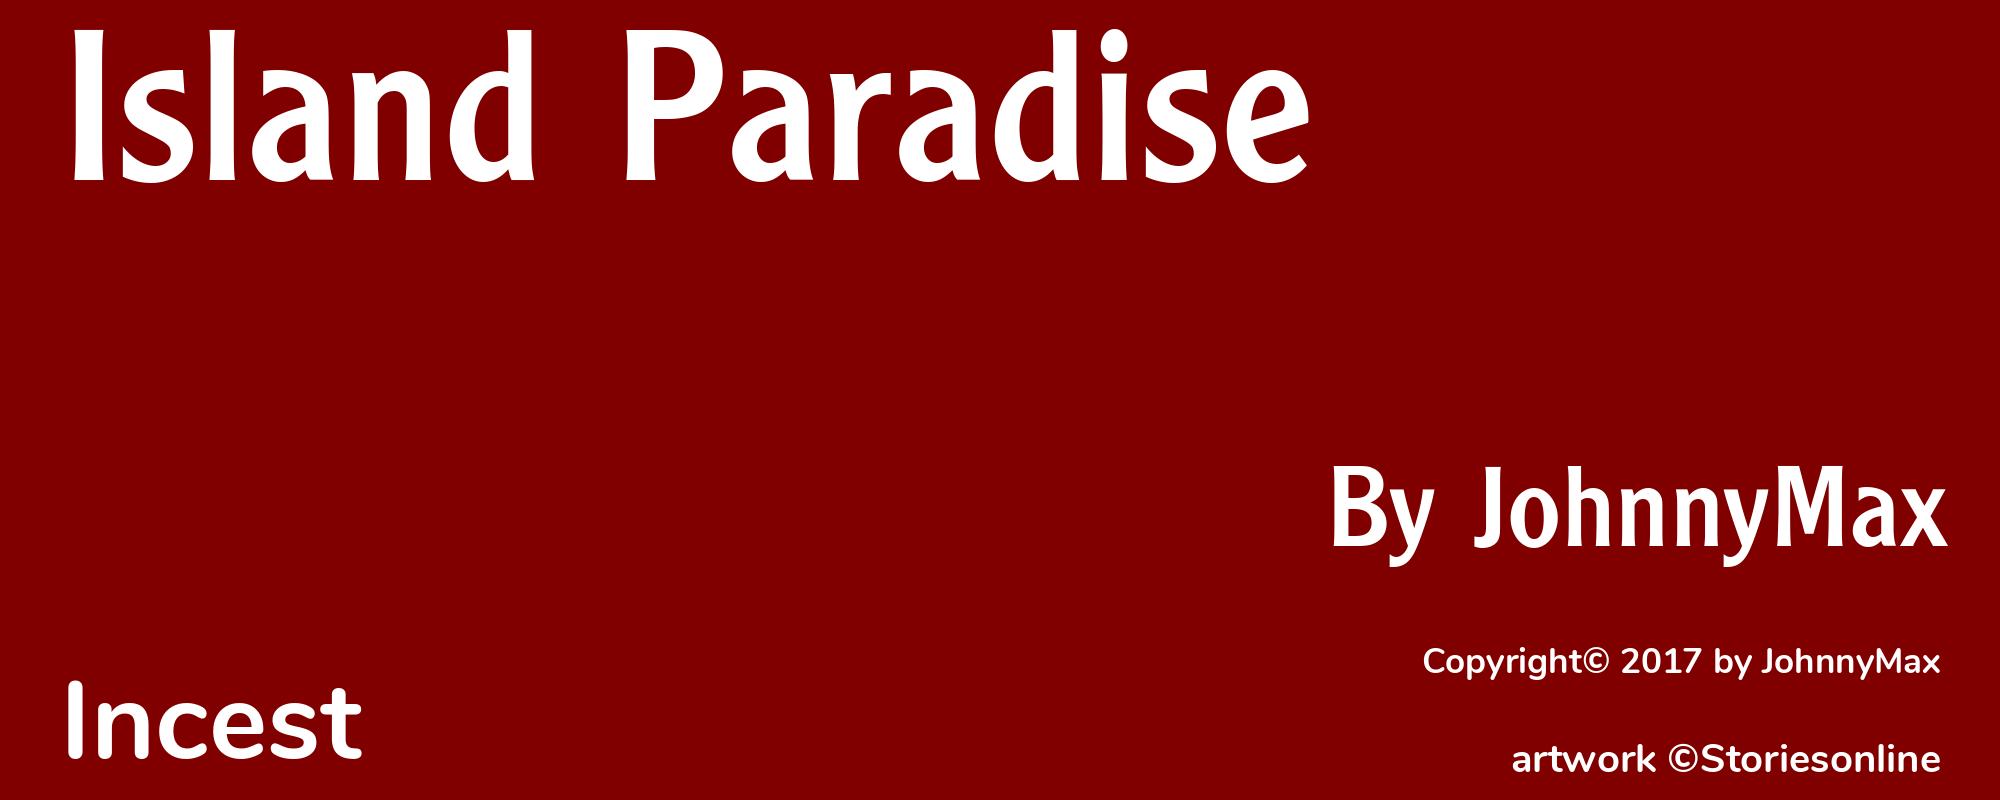 Island Paradise - Cover